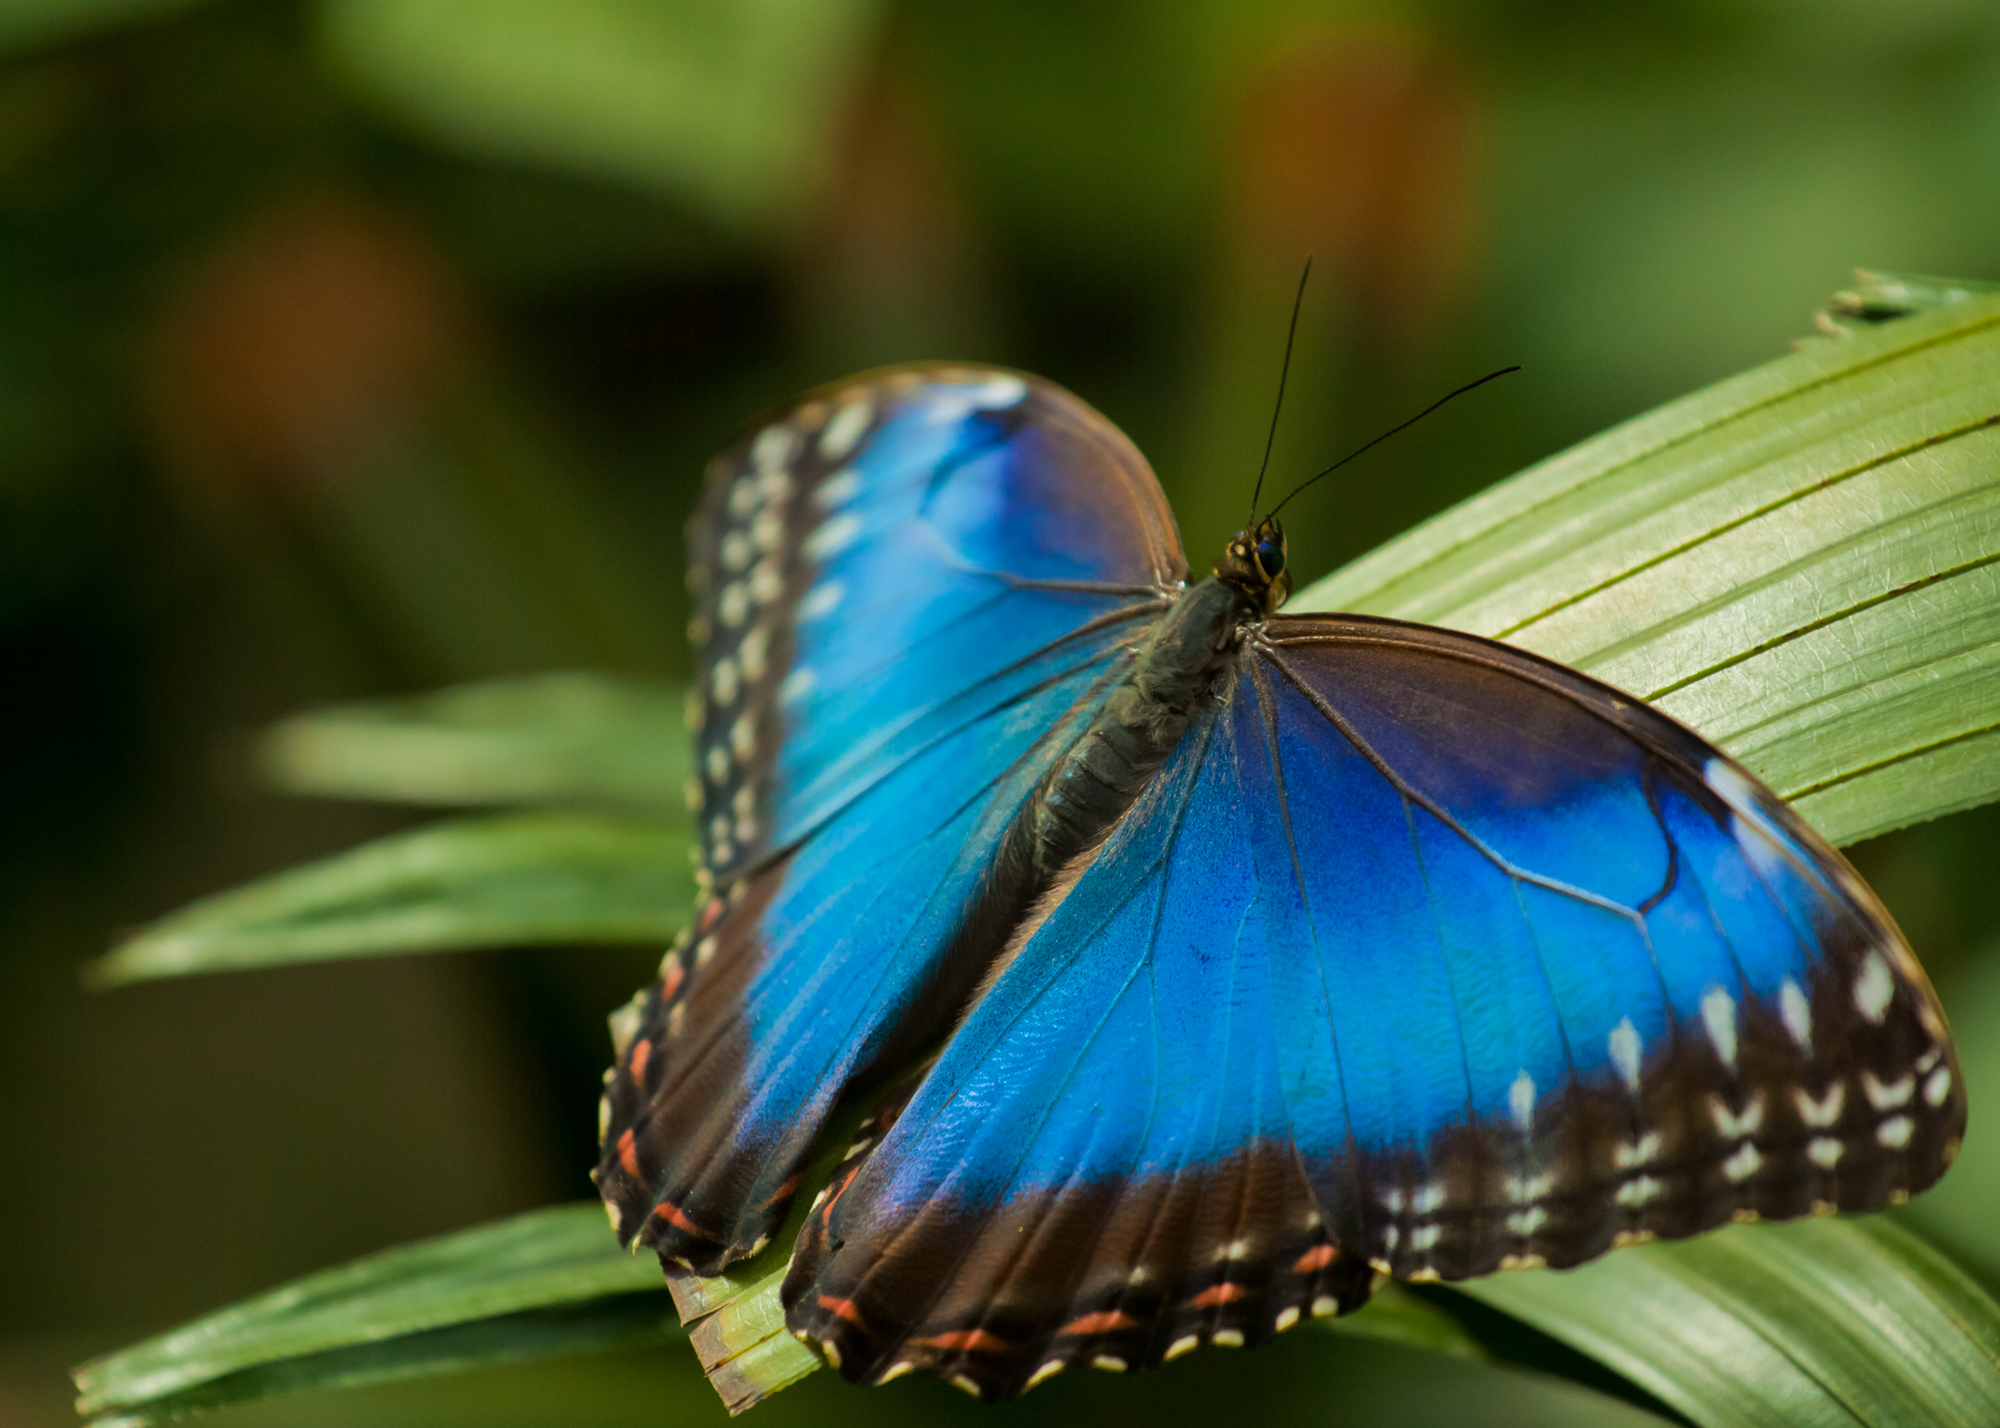 Morpho butterfly, Costa Rica